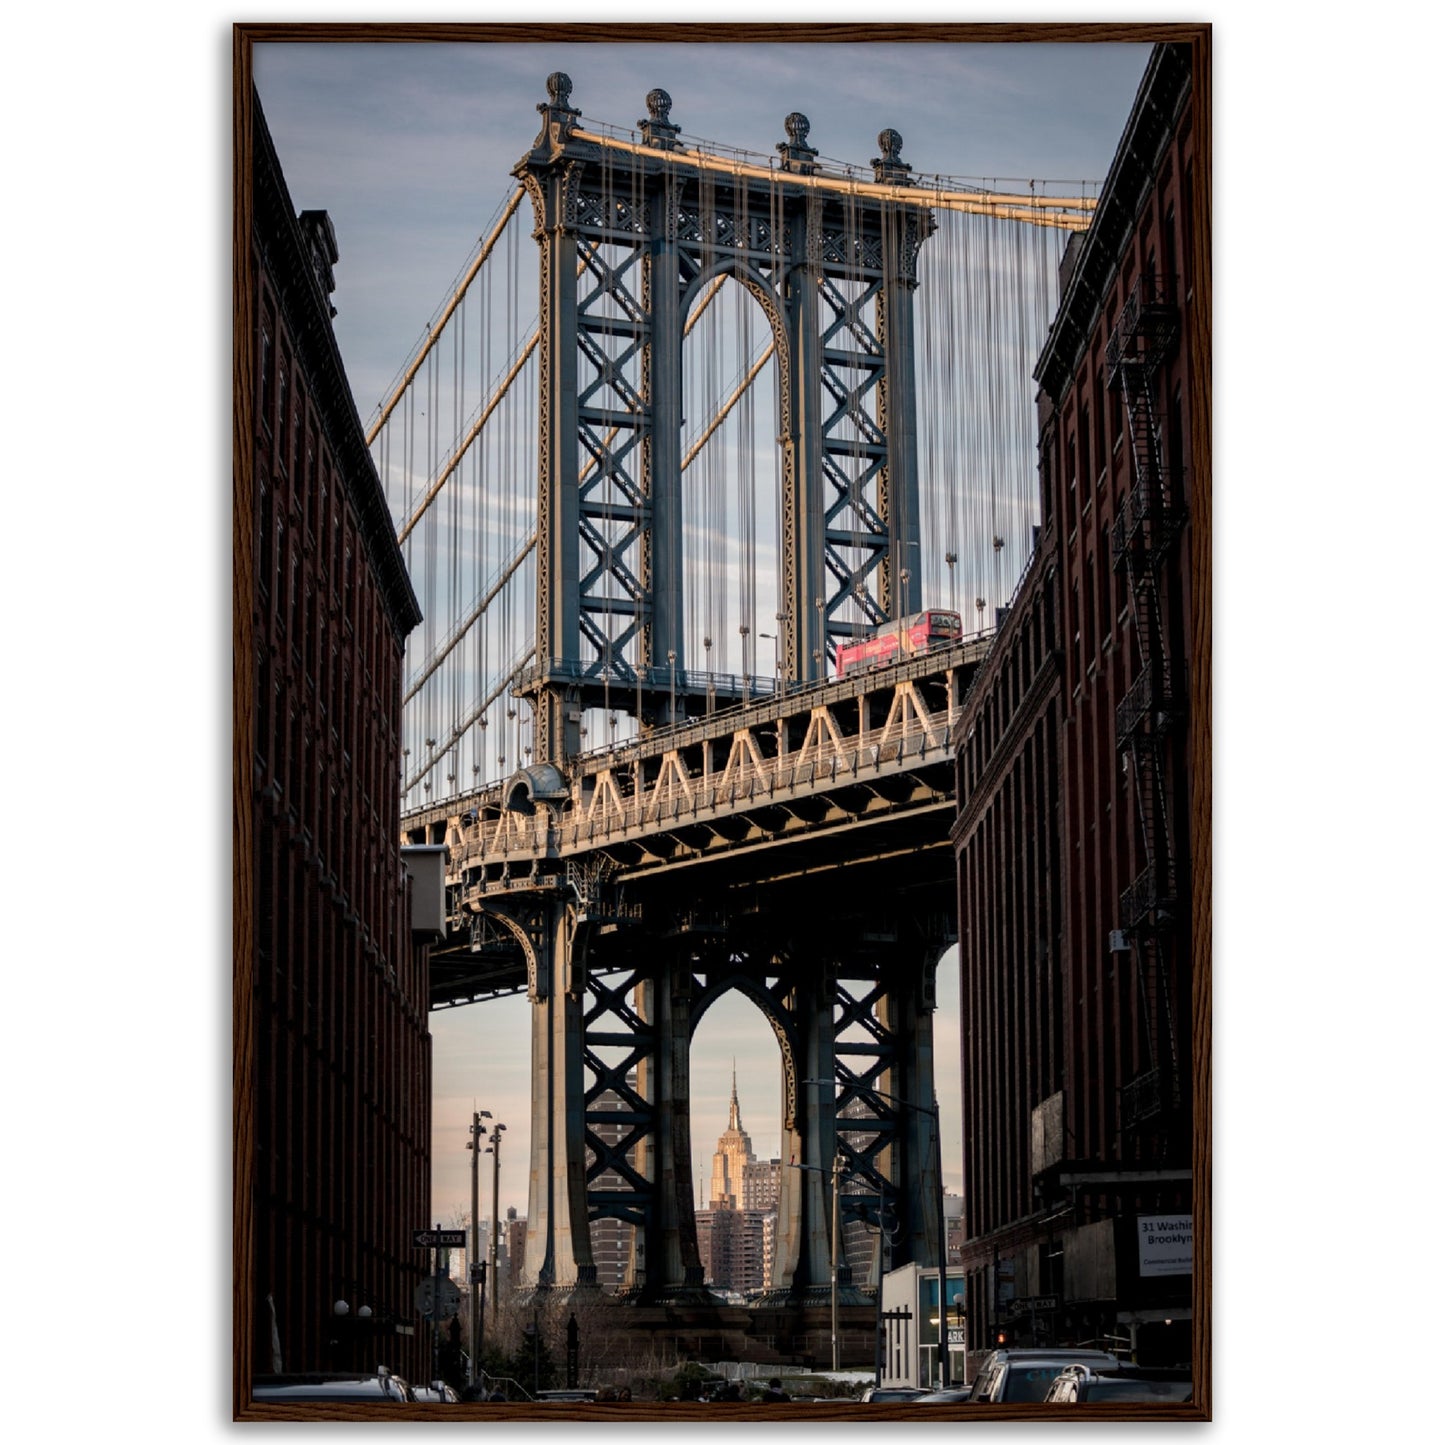 Manhattan Bridge Print